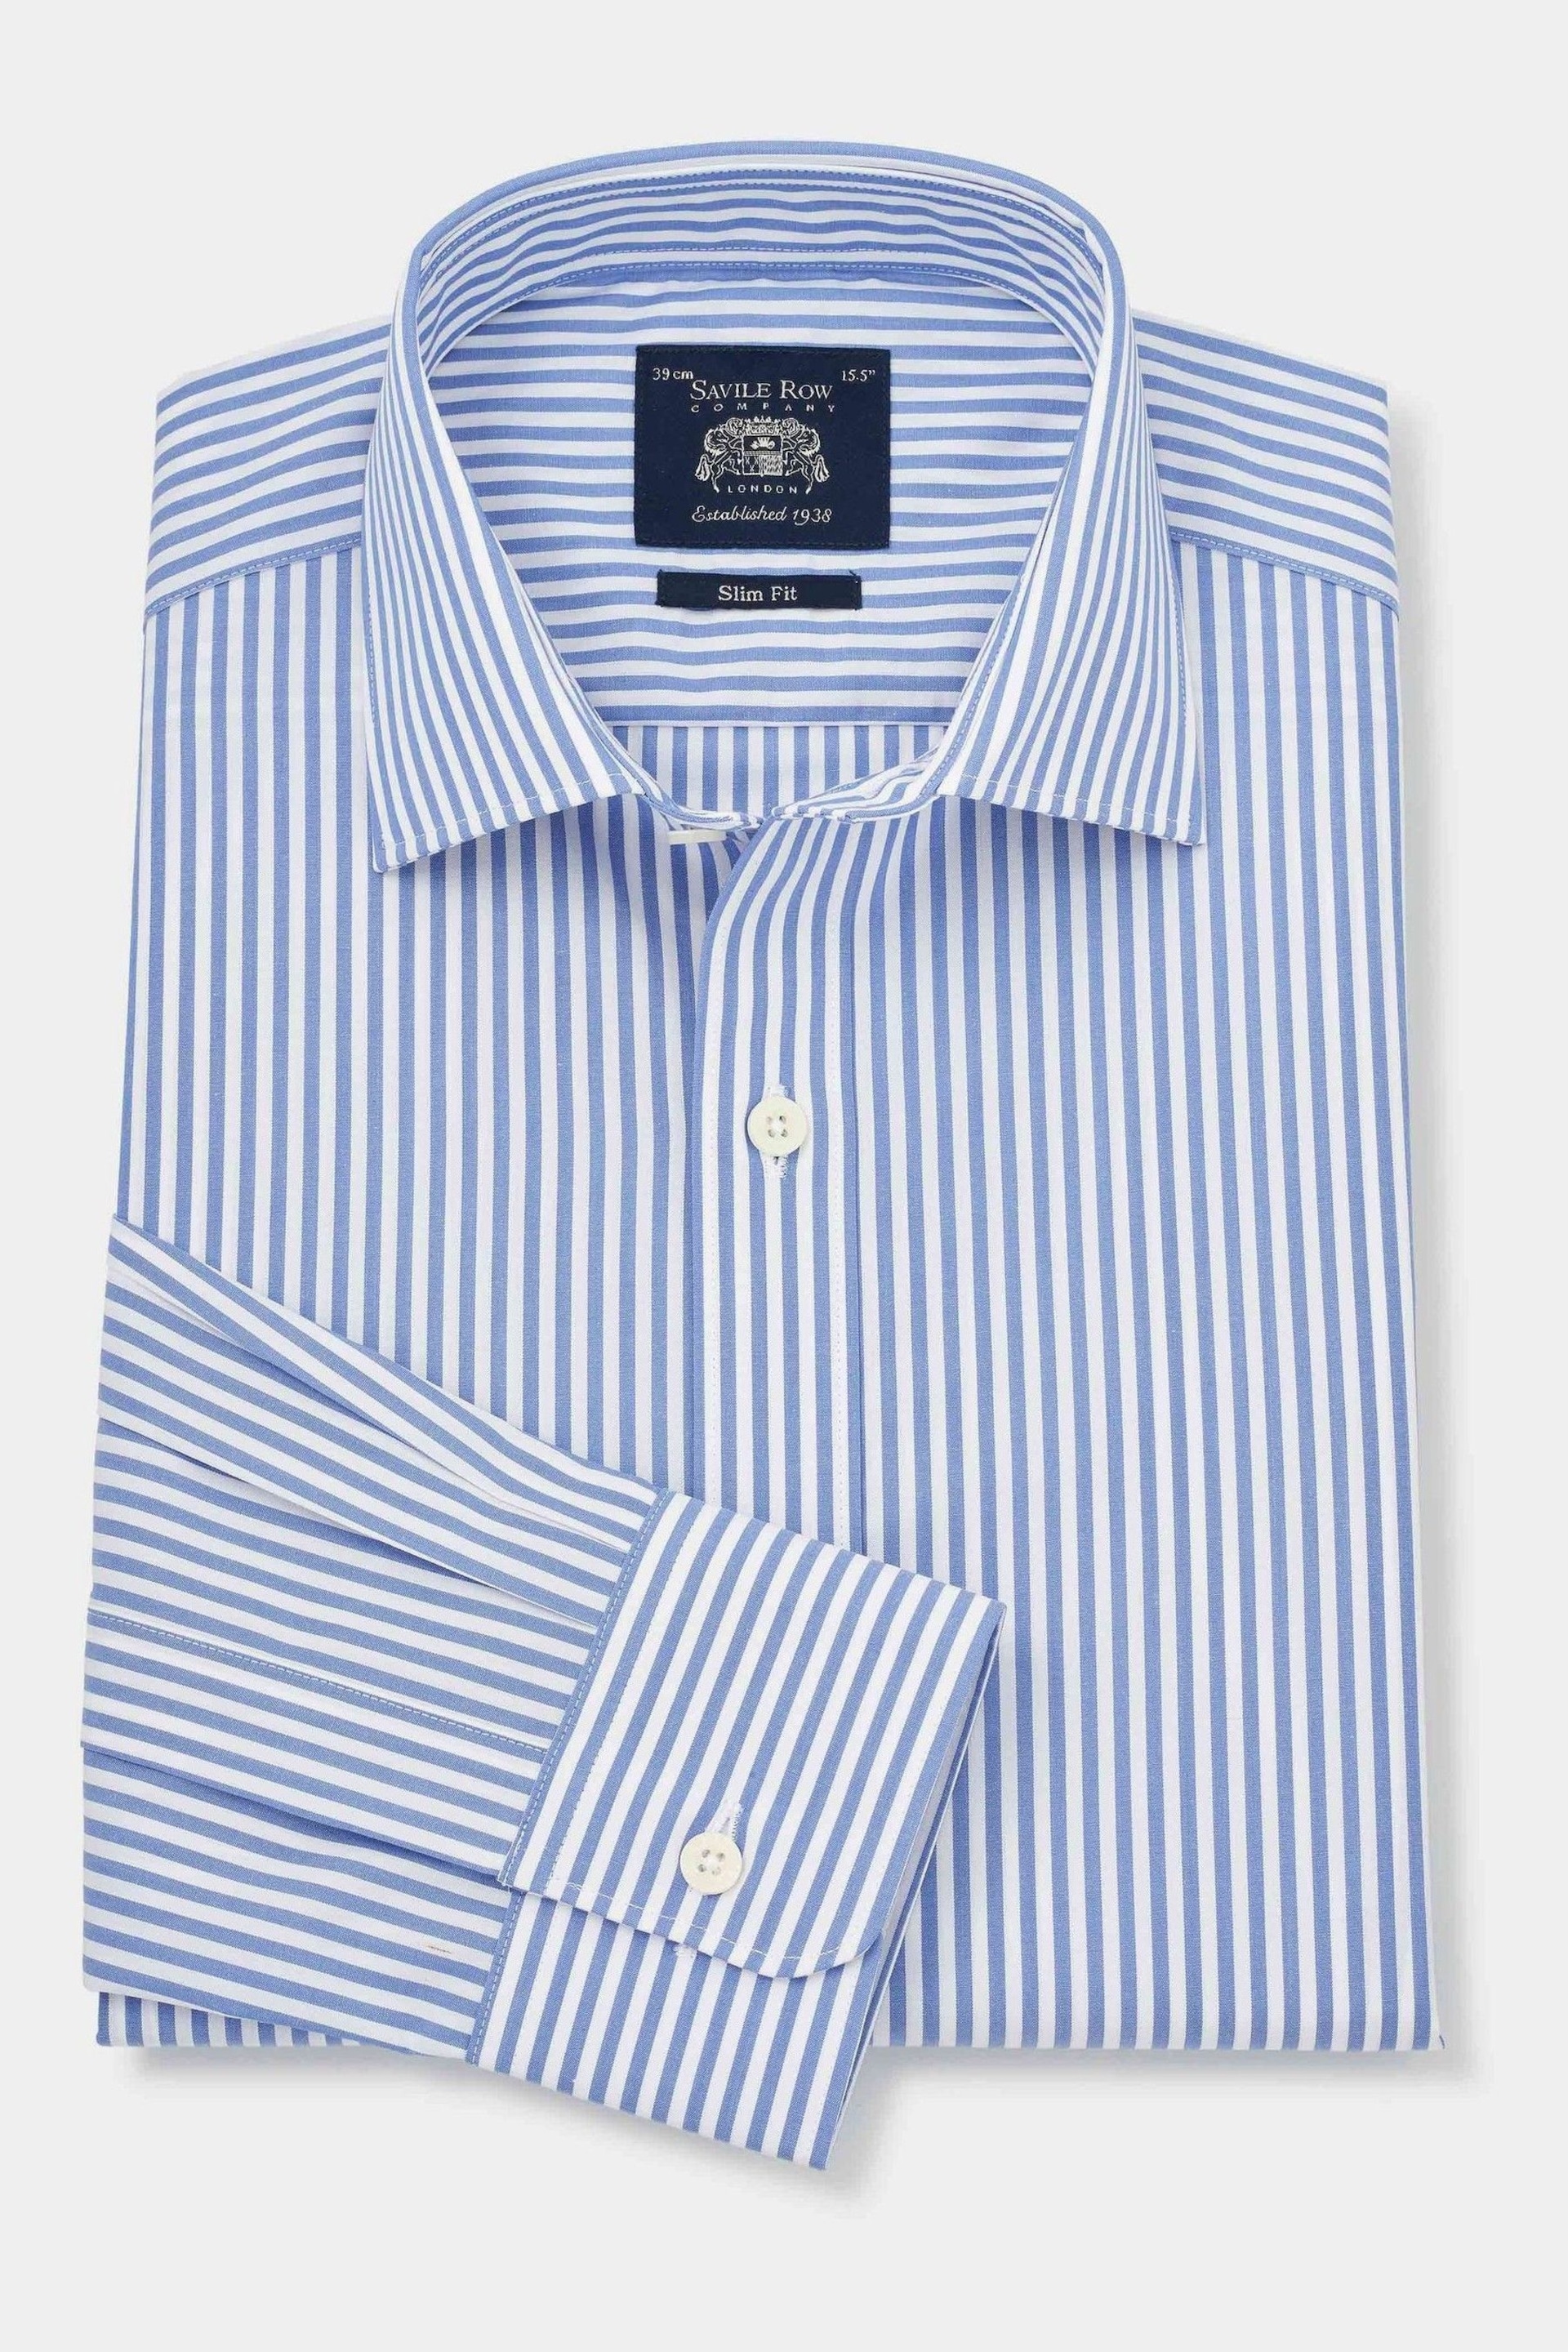 Savile Row Company Blue Stripe Slim Fit Single Cuff Shirt - Image 3 of 5